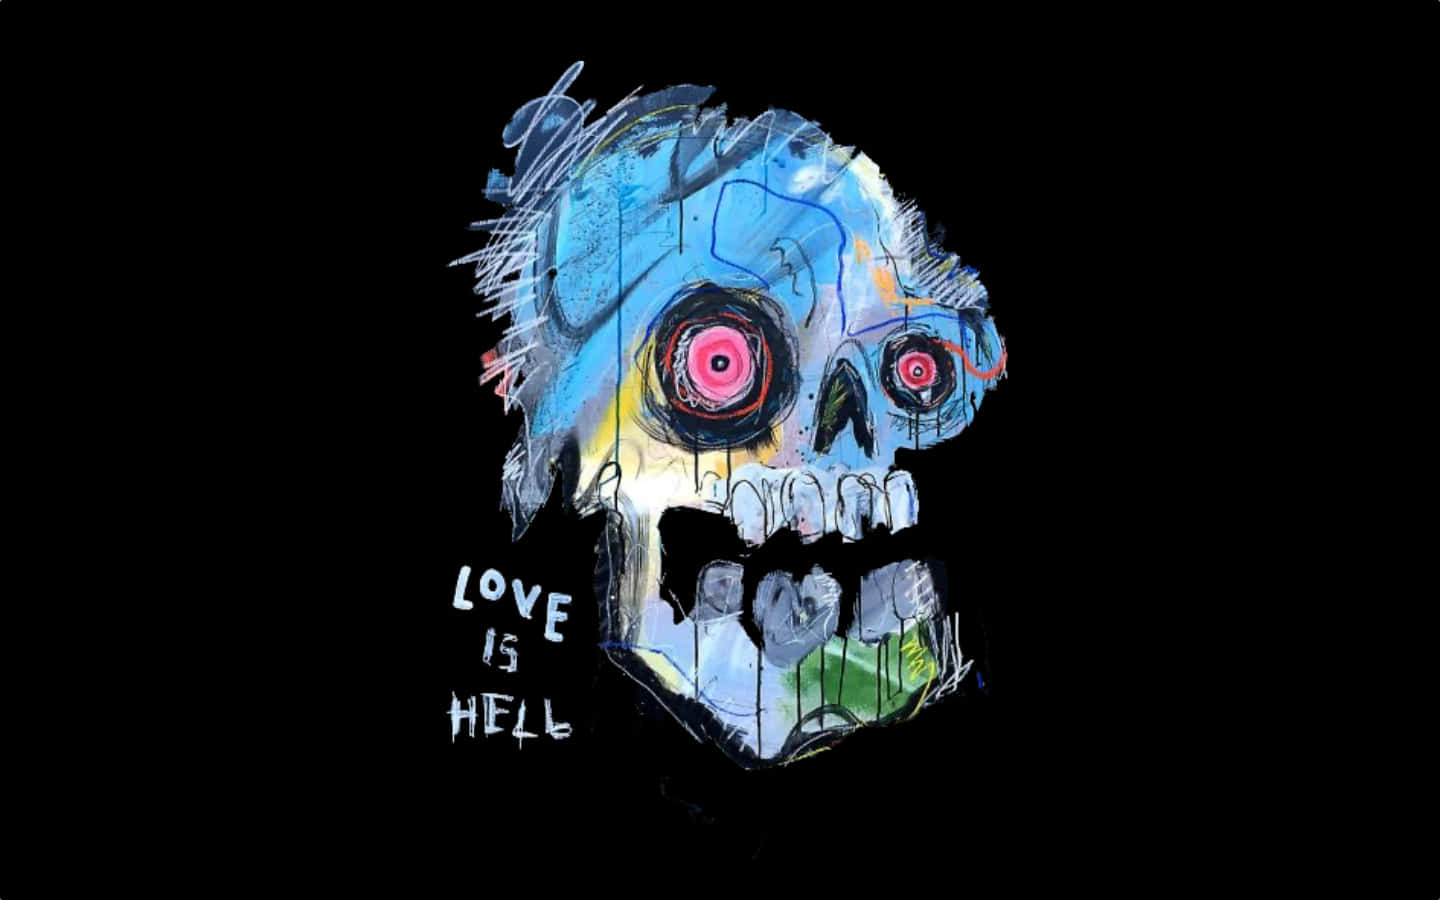 love is hell by savage savage Wallpaper